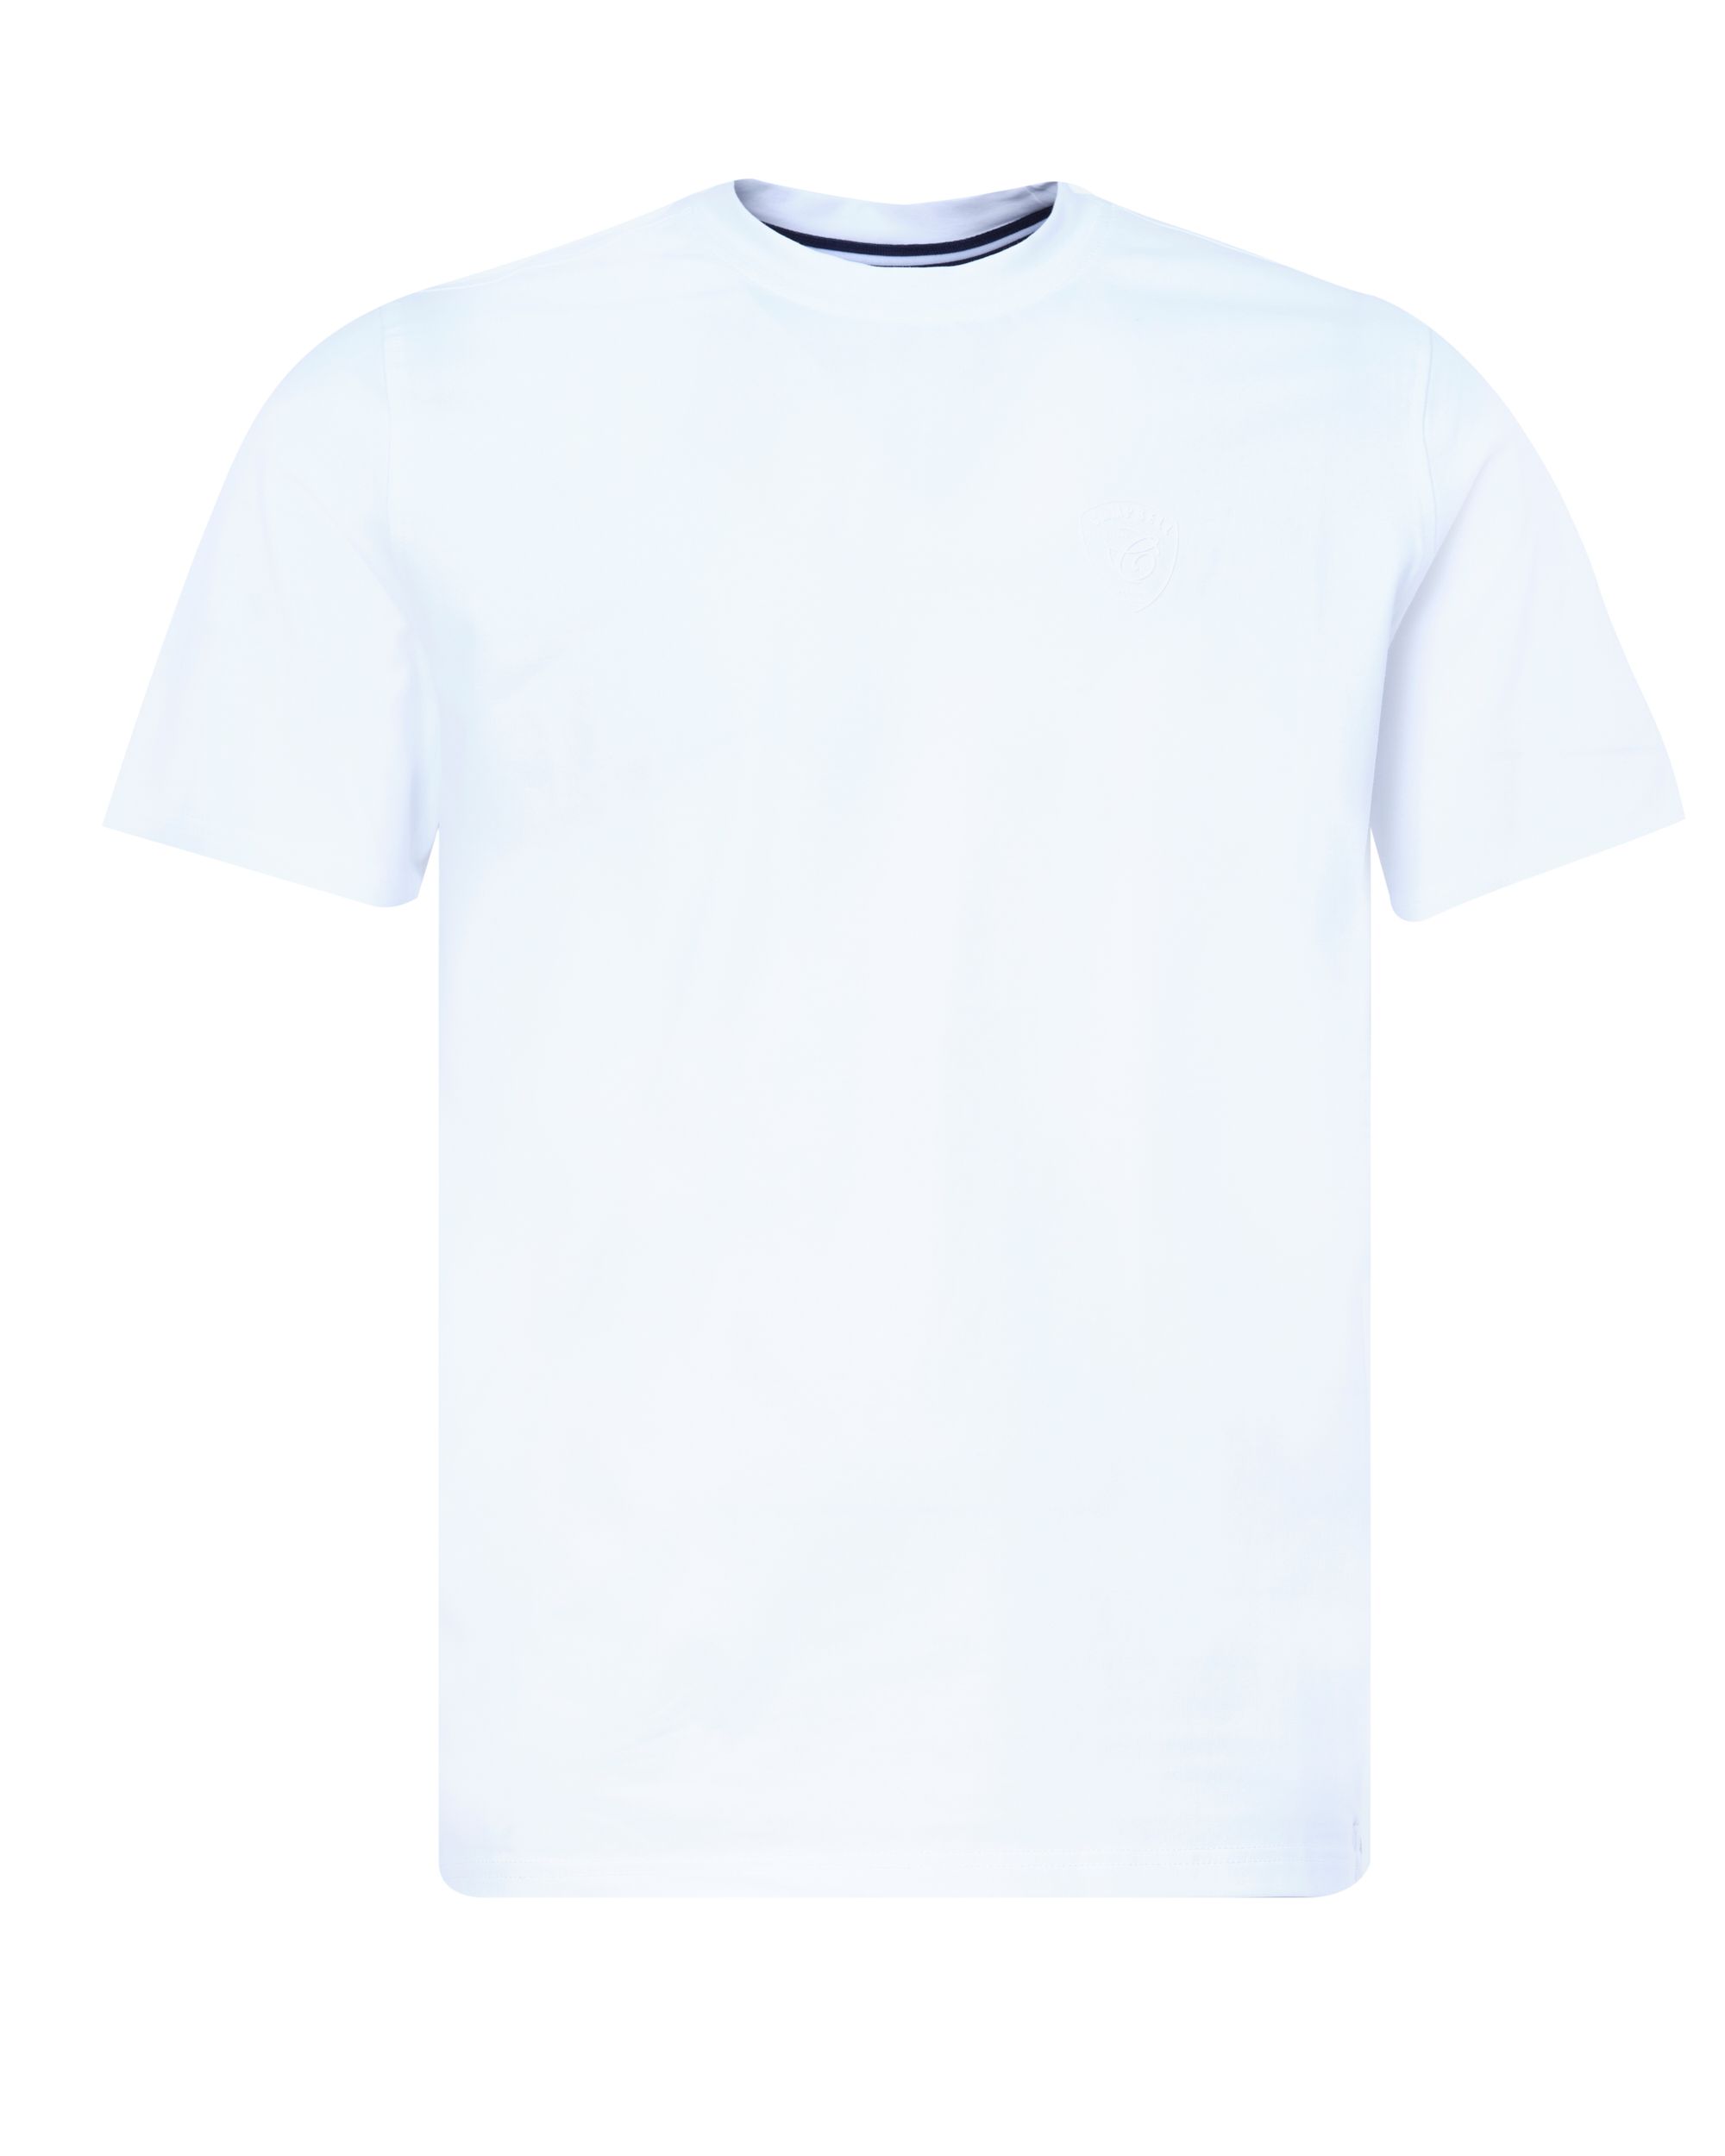 Campbell Classic T shirt KM WHITE 084754-002-L